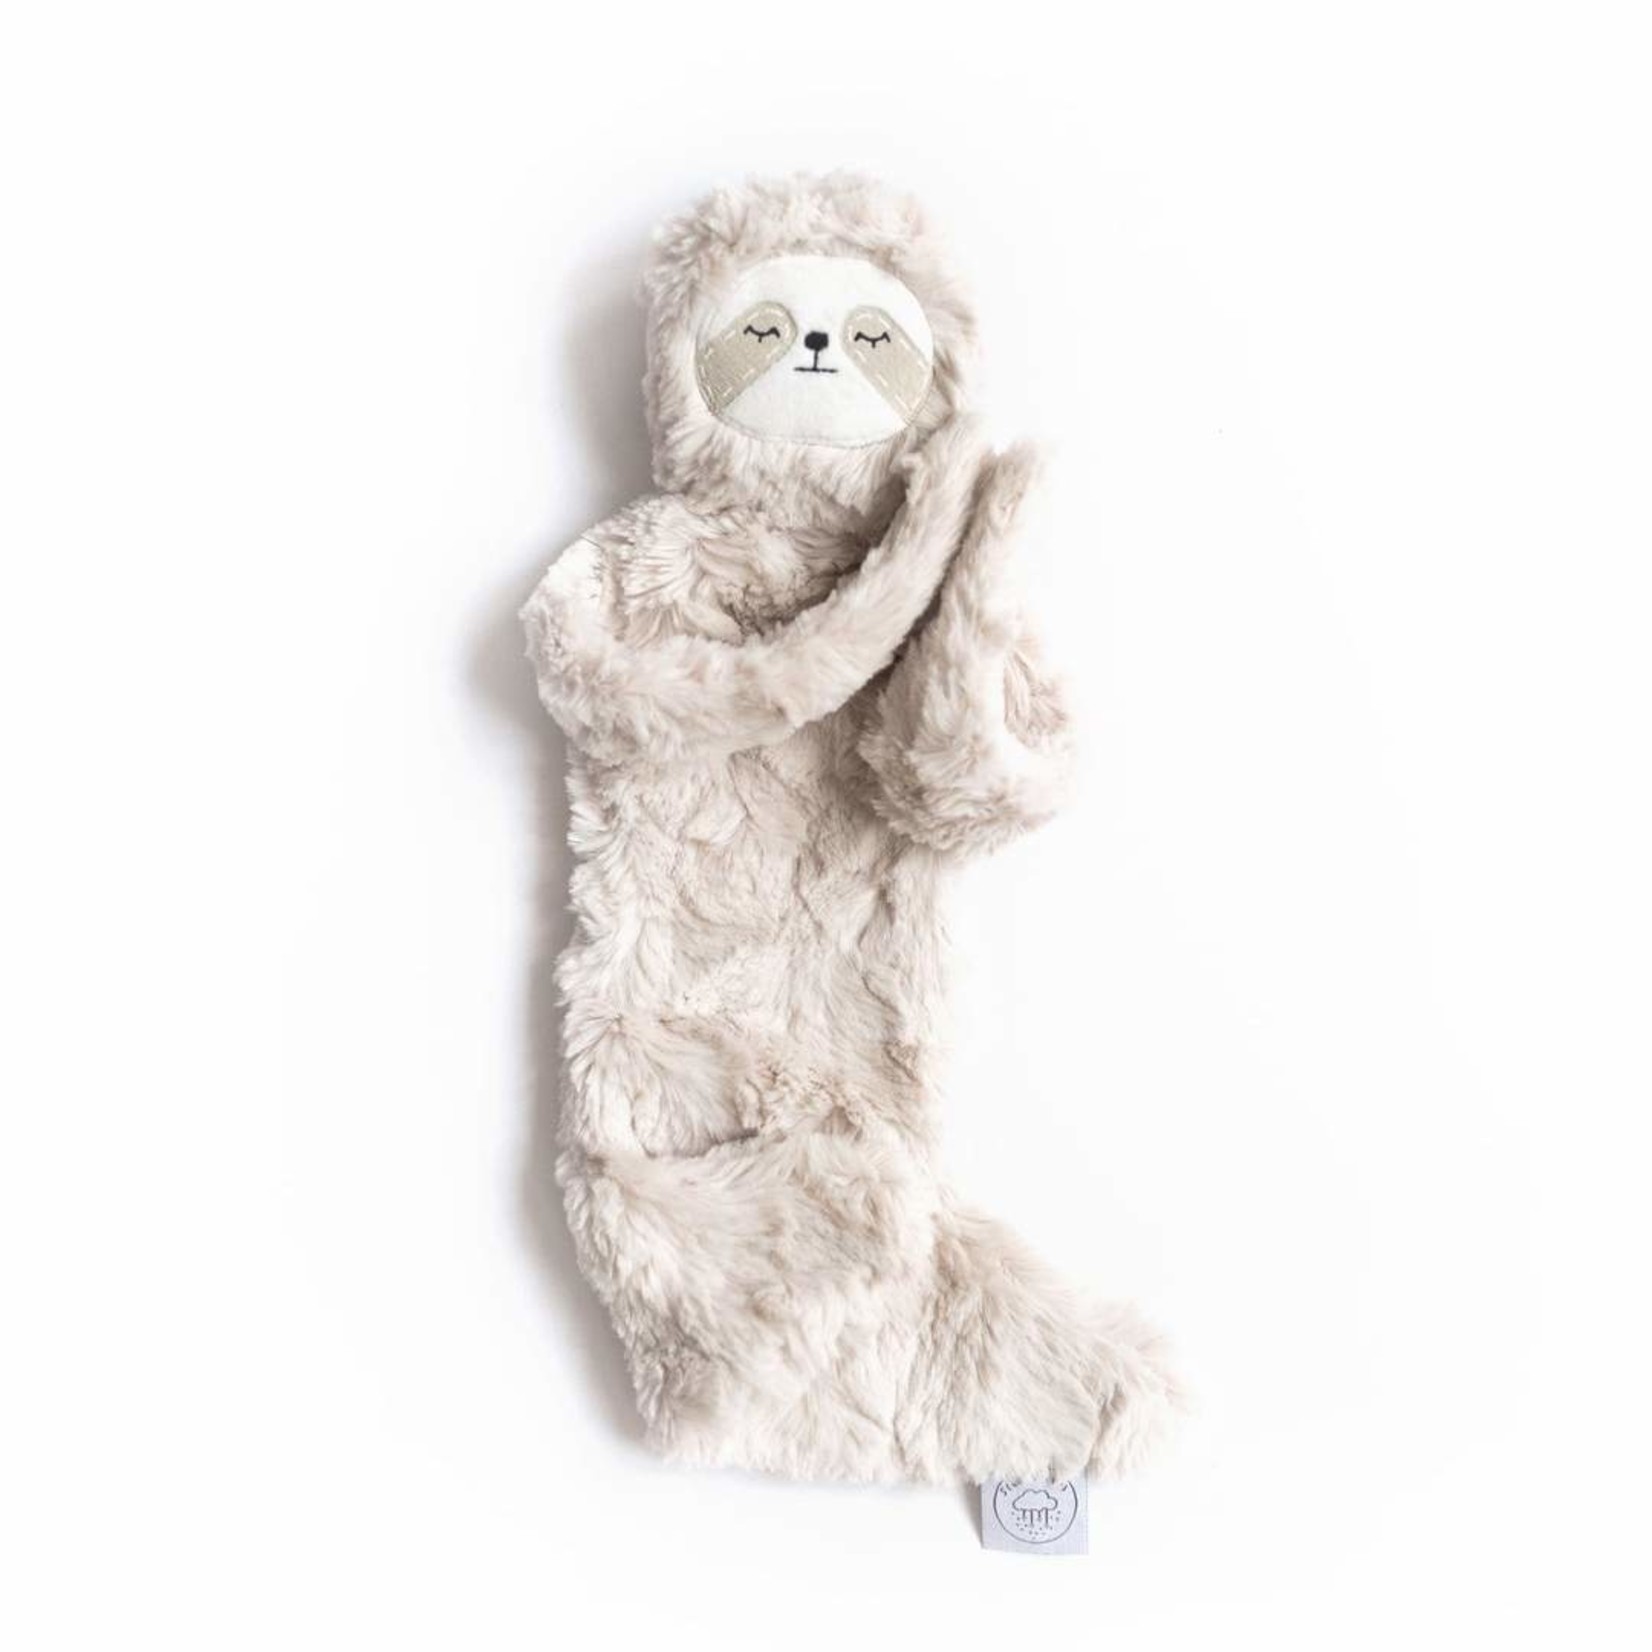 Slumberkins Sloth Snuggler Creature Full of Feels | Slumberkins